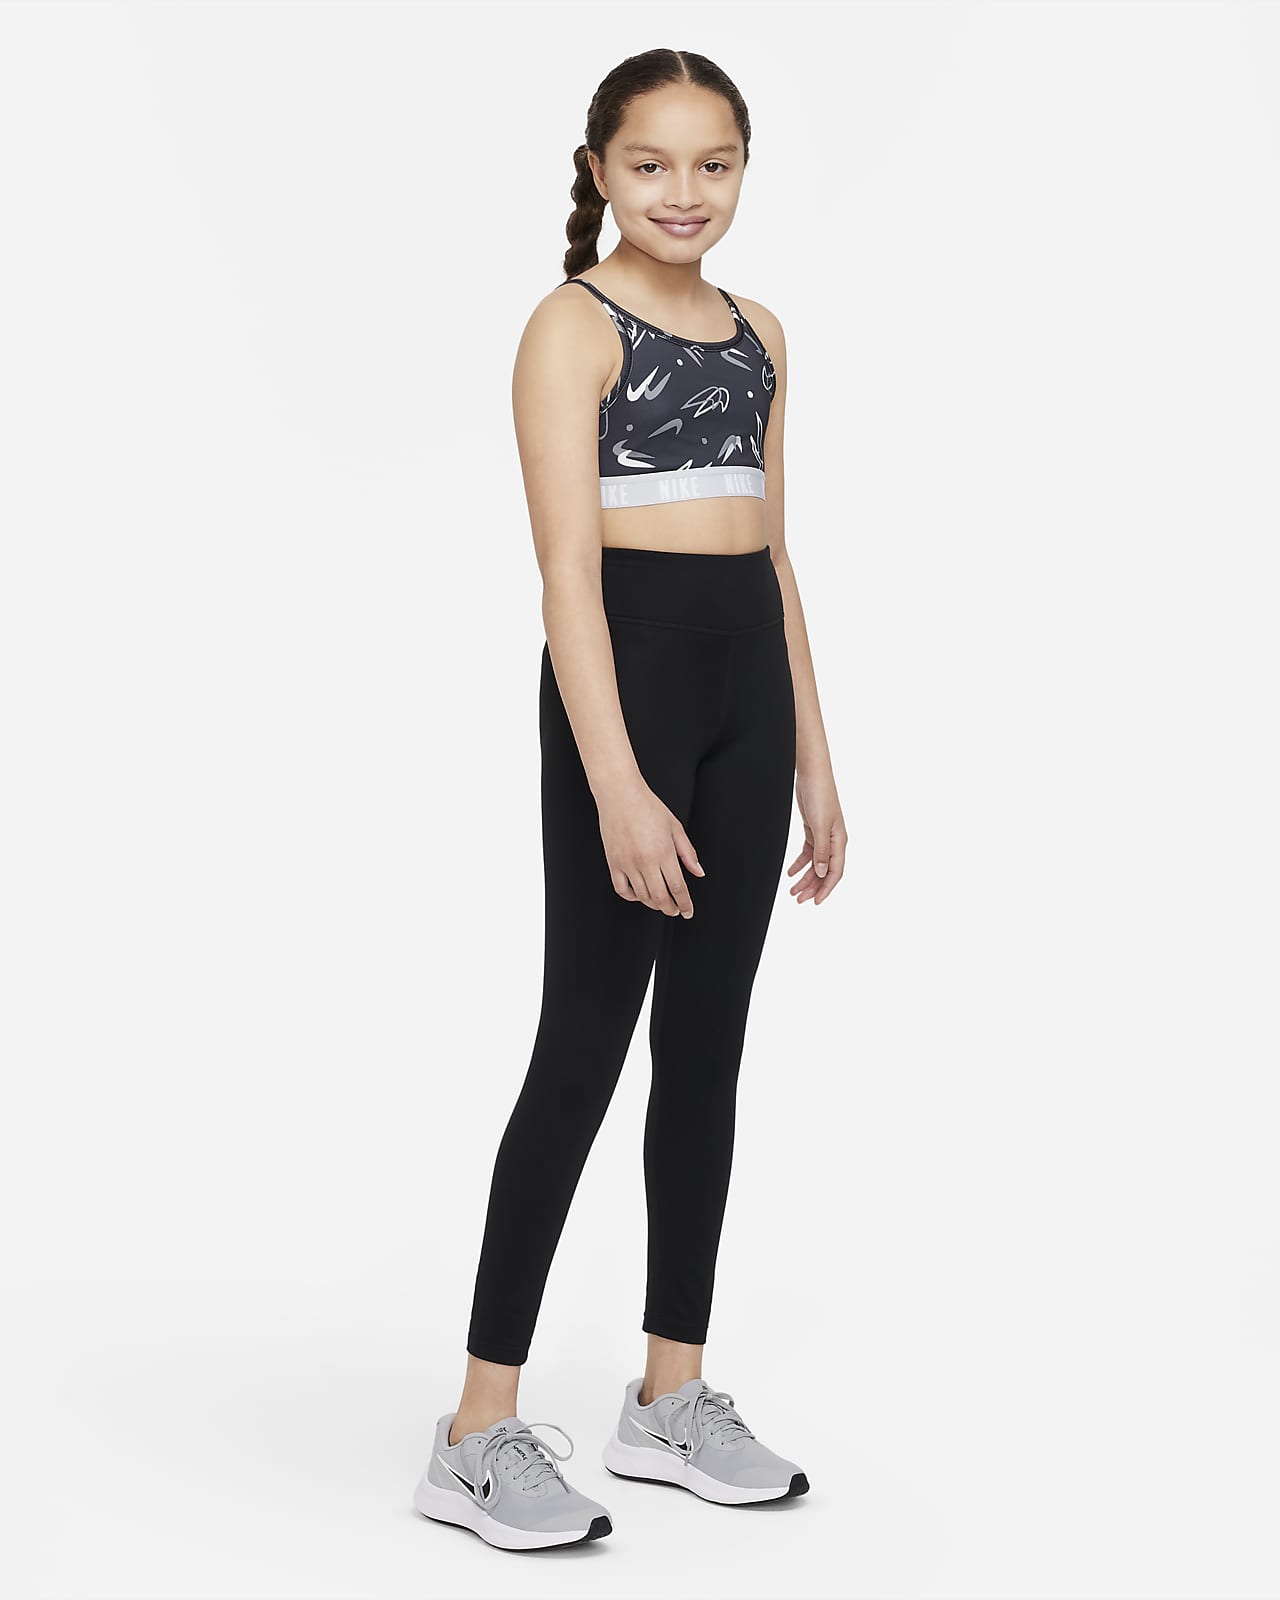 Nike Big Girls' Trophy Sports Bra, Girls' Underwear & Bras